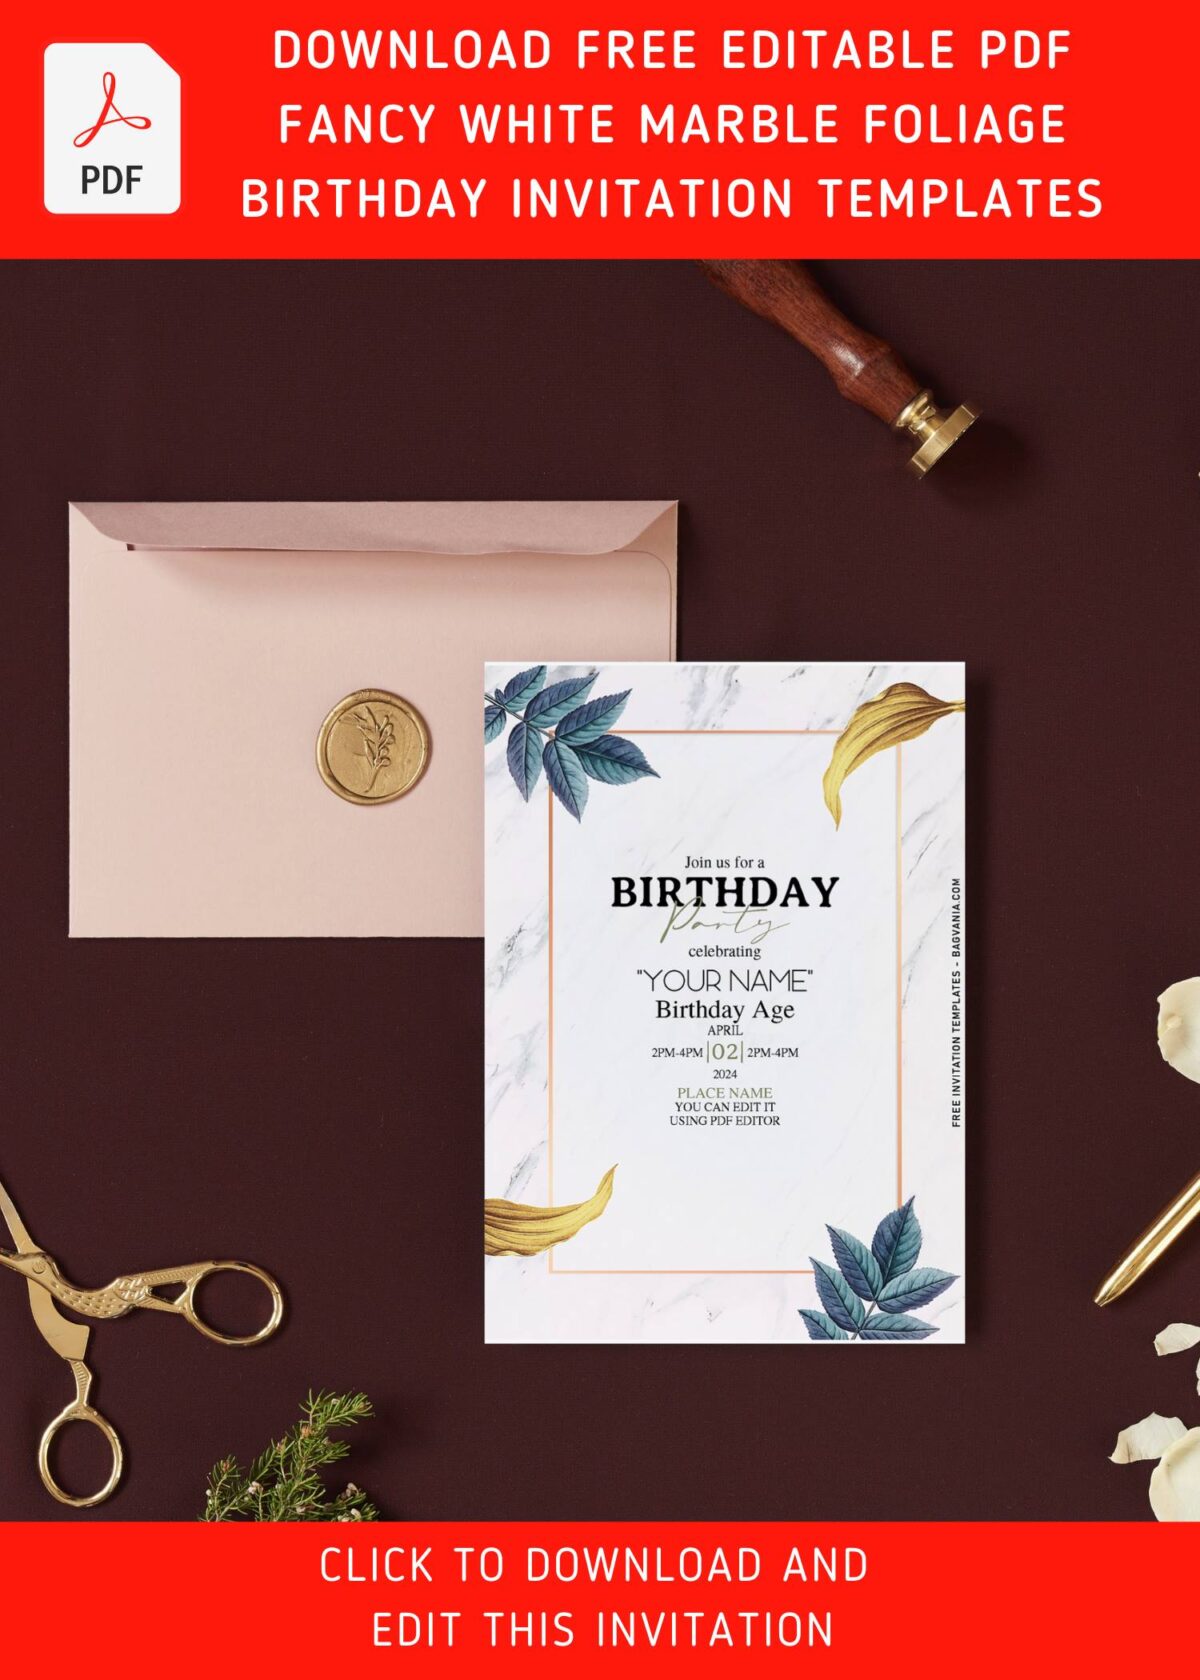 (Free Editable PDF) Splendid White Marble & Foliage Birthday Invitation Templates with elegant script